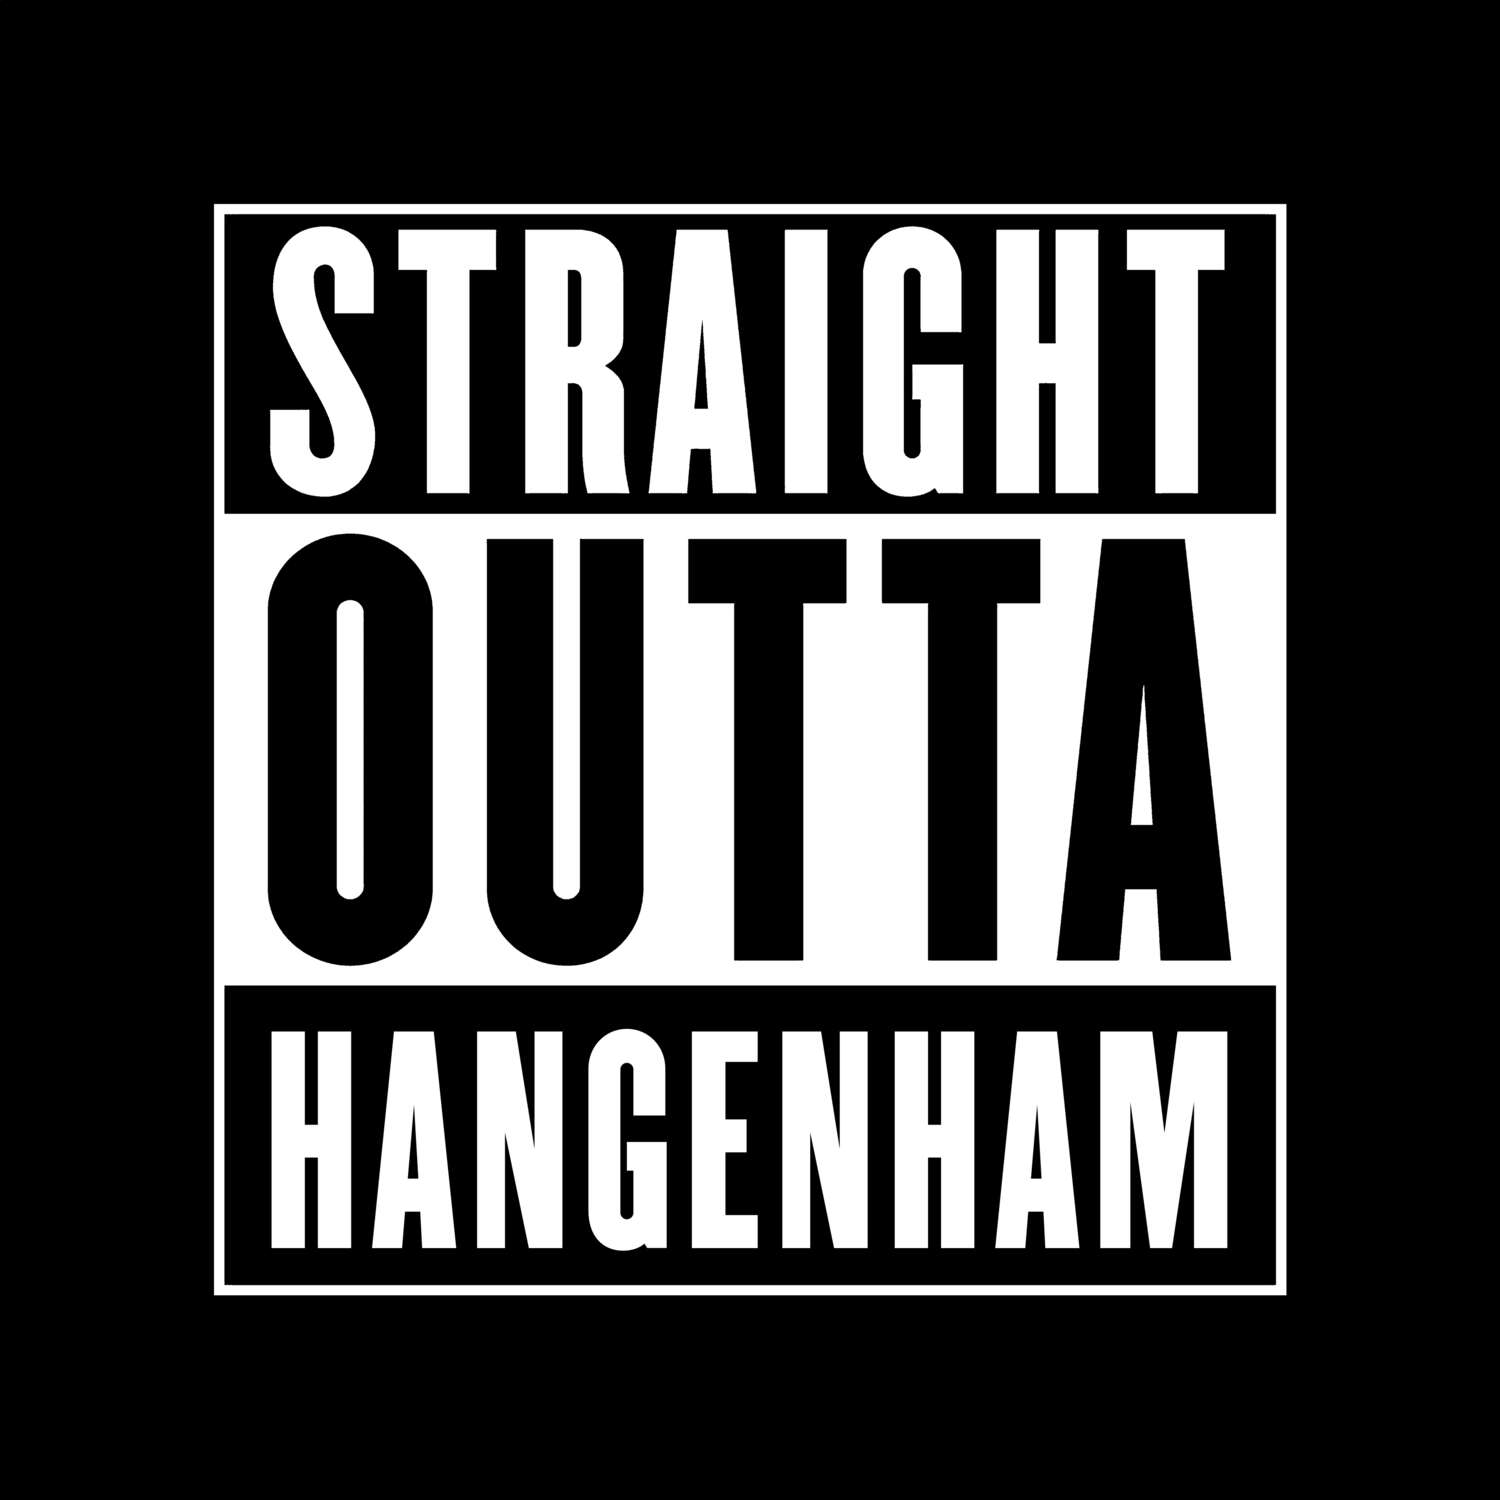 Hangenham T-Shirt »Straight Outta«